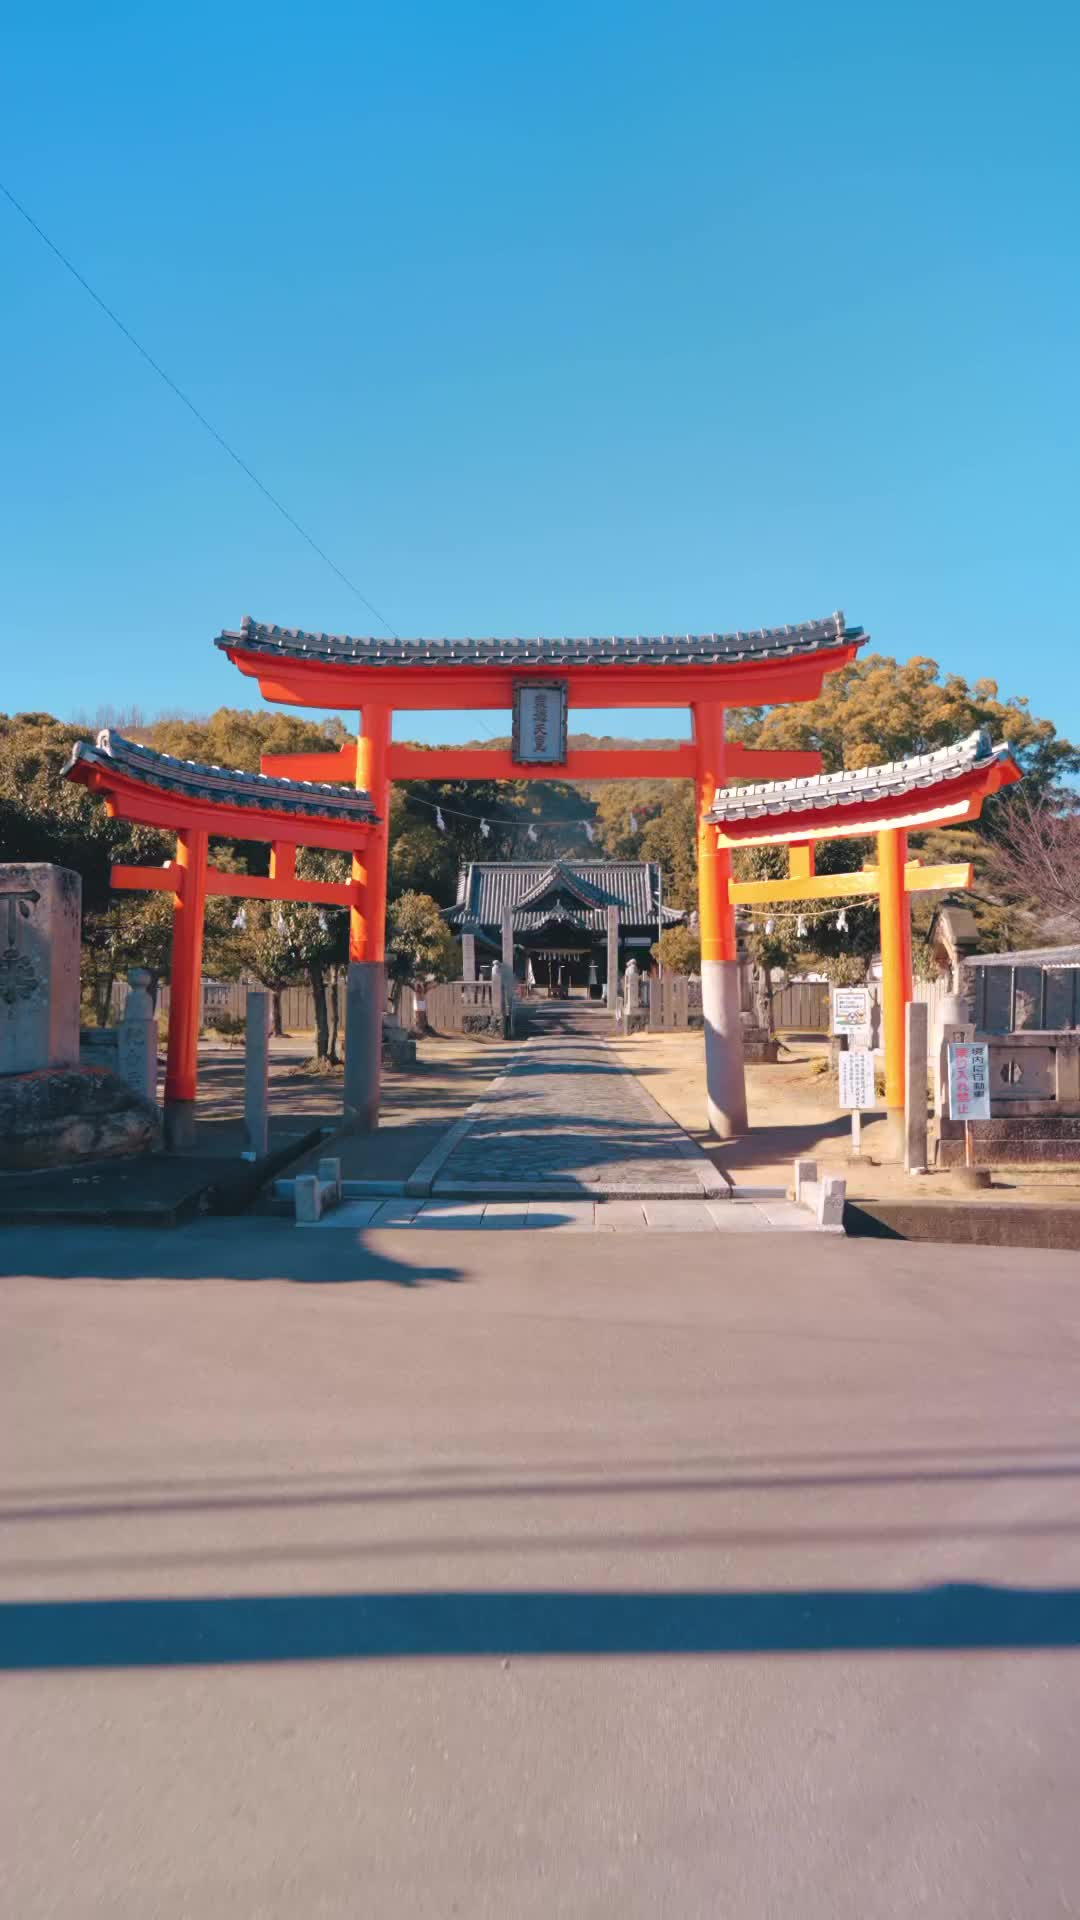 Unique Triple Torii at Tennoji Temple in Sakaide, Japan